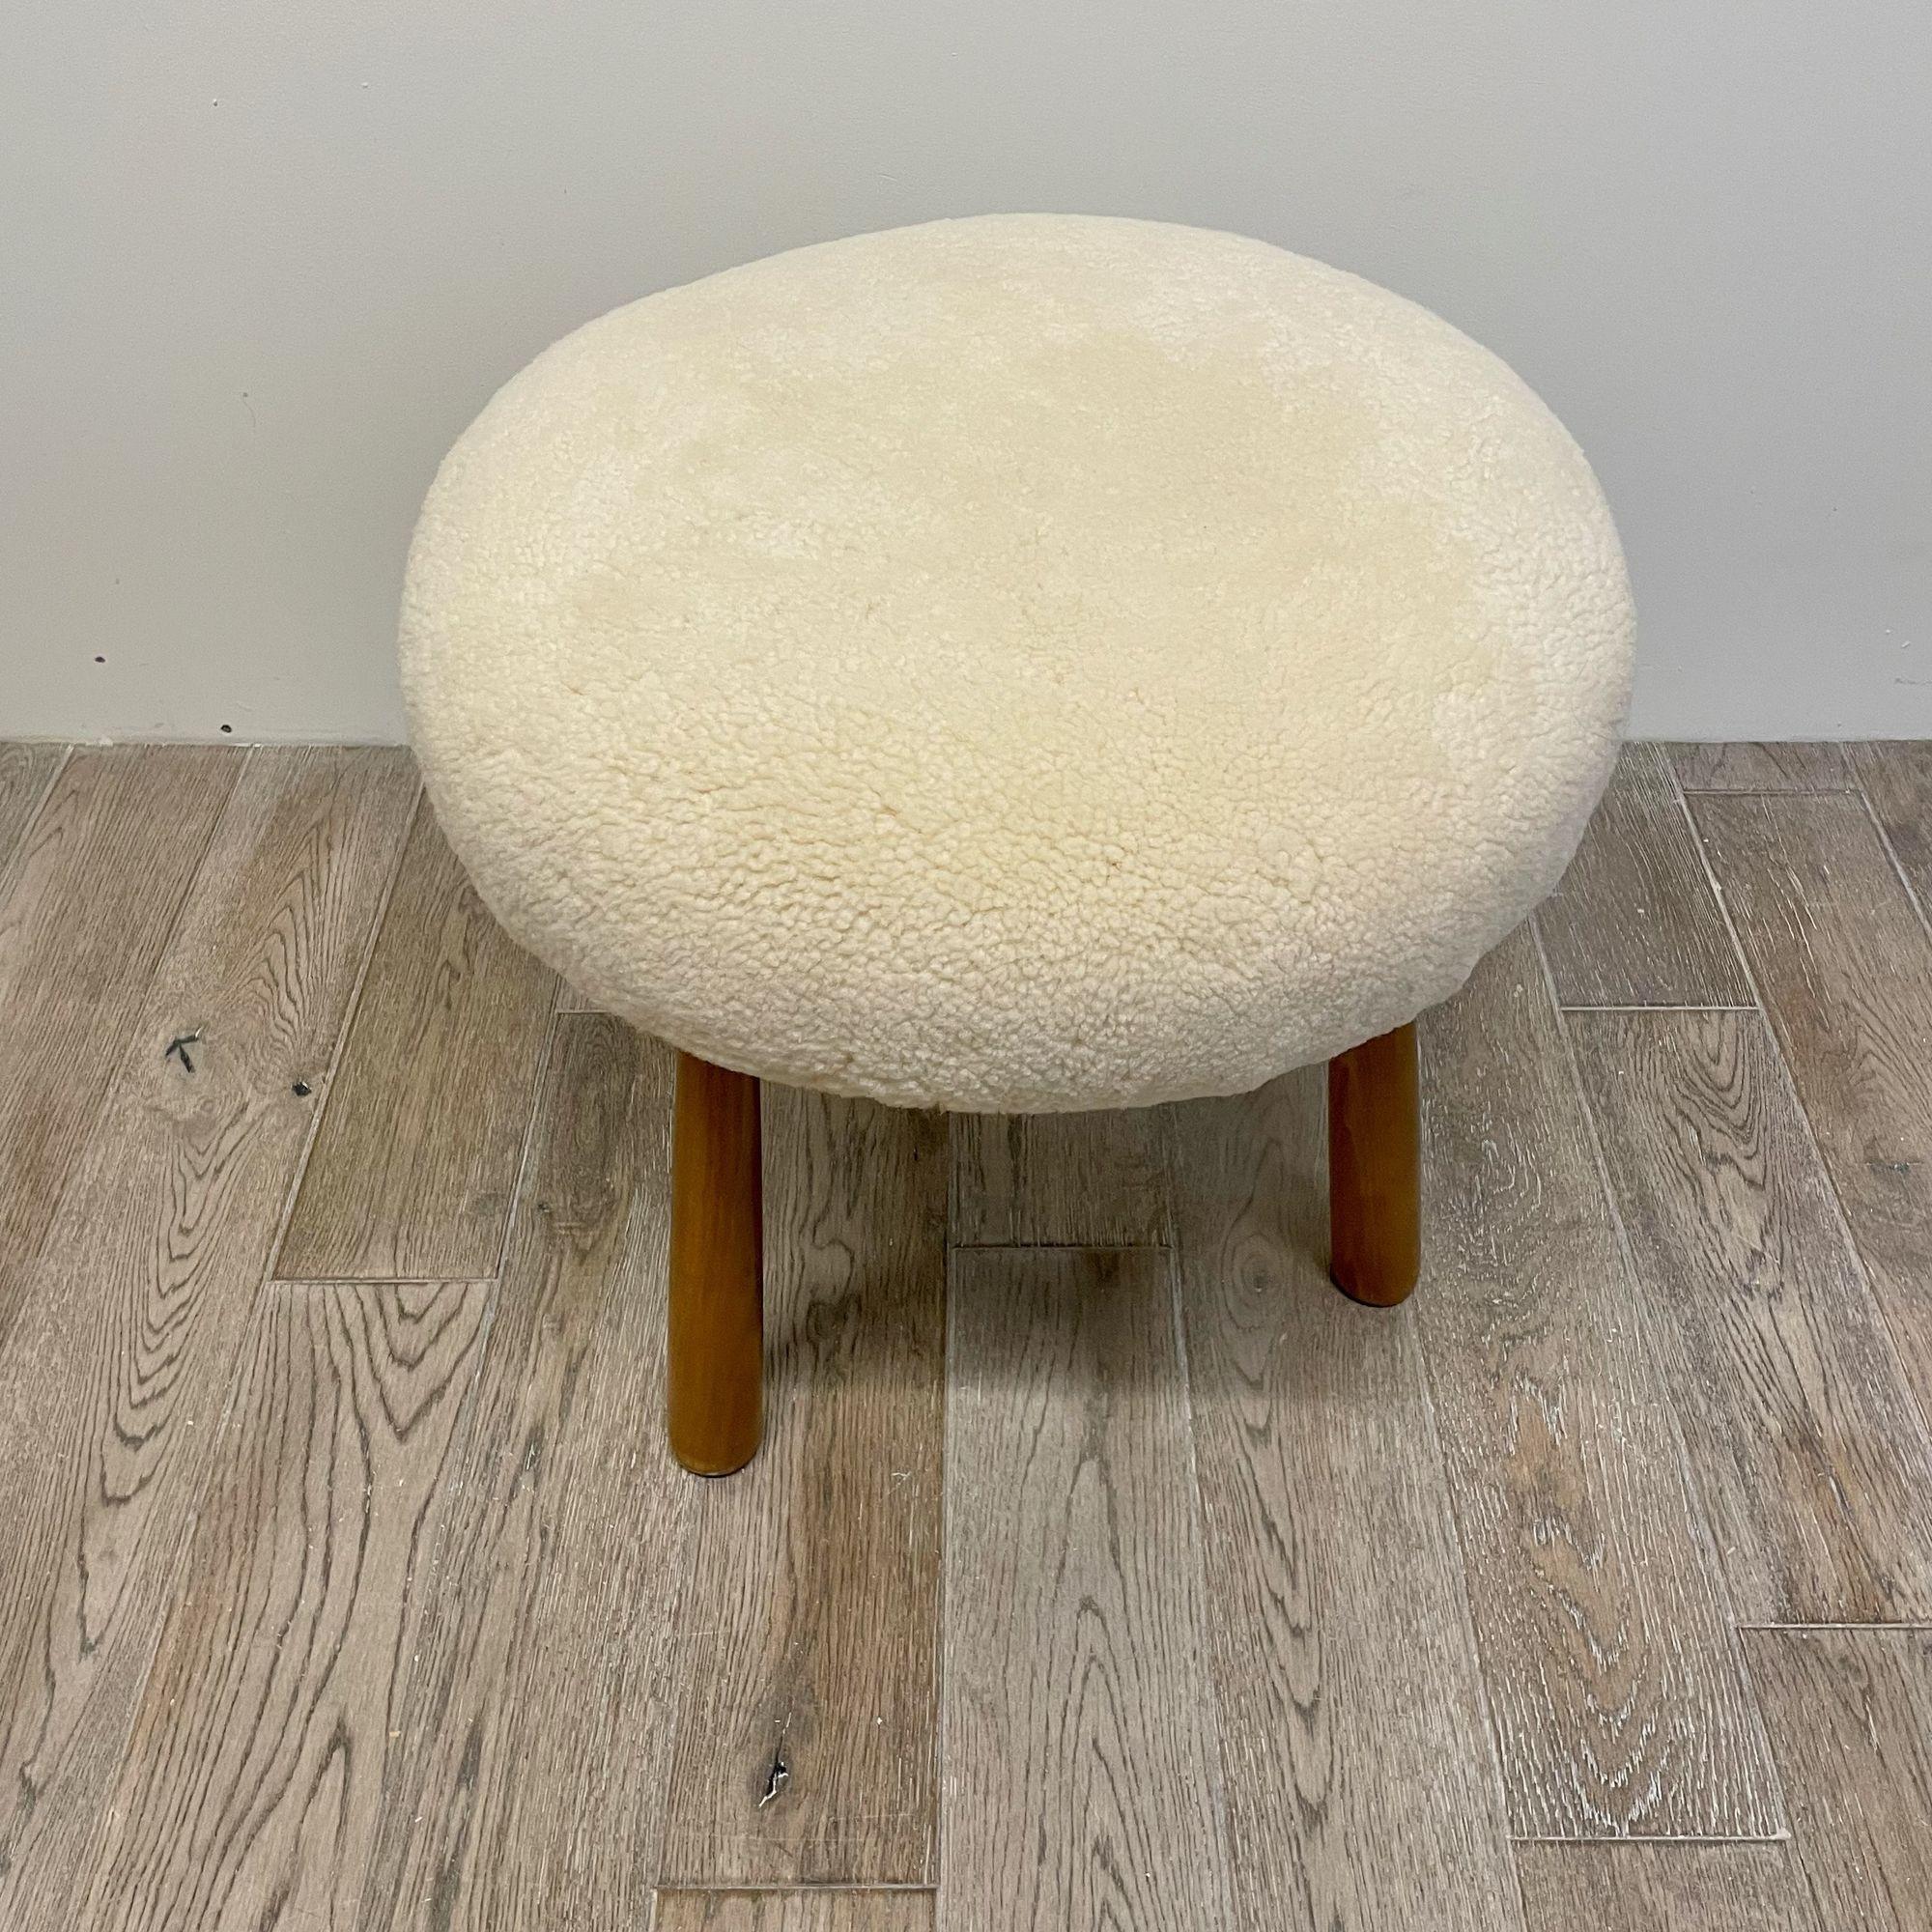 American Contemporary Swedish Modern Style Sheepskin Footstool / Ottoman, Beige For Sale